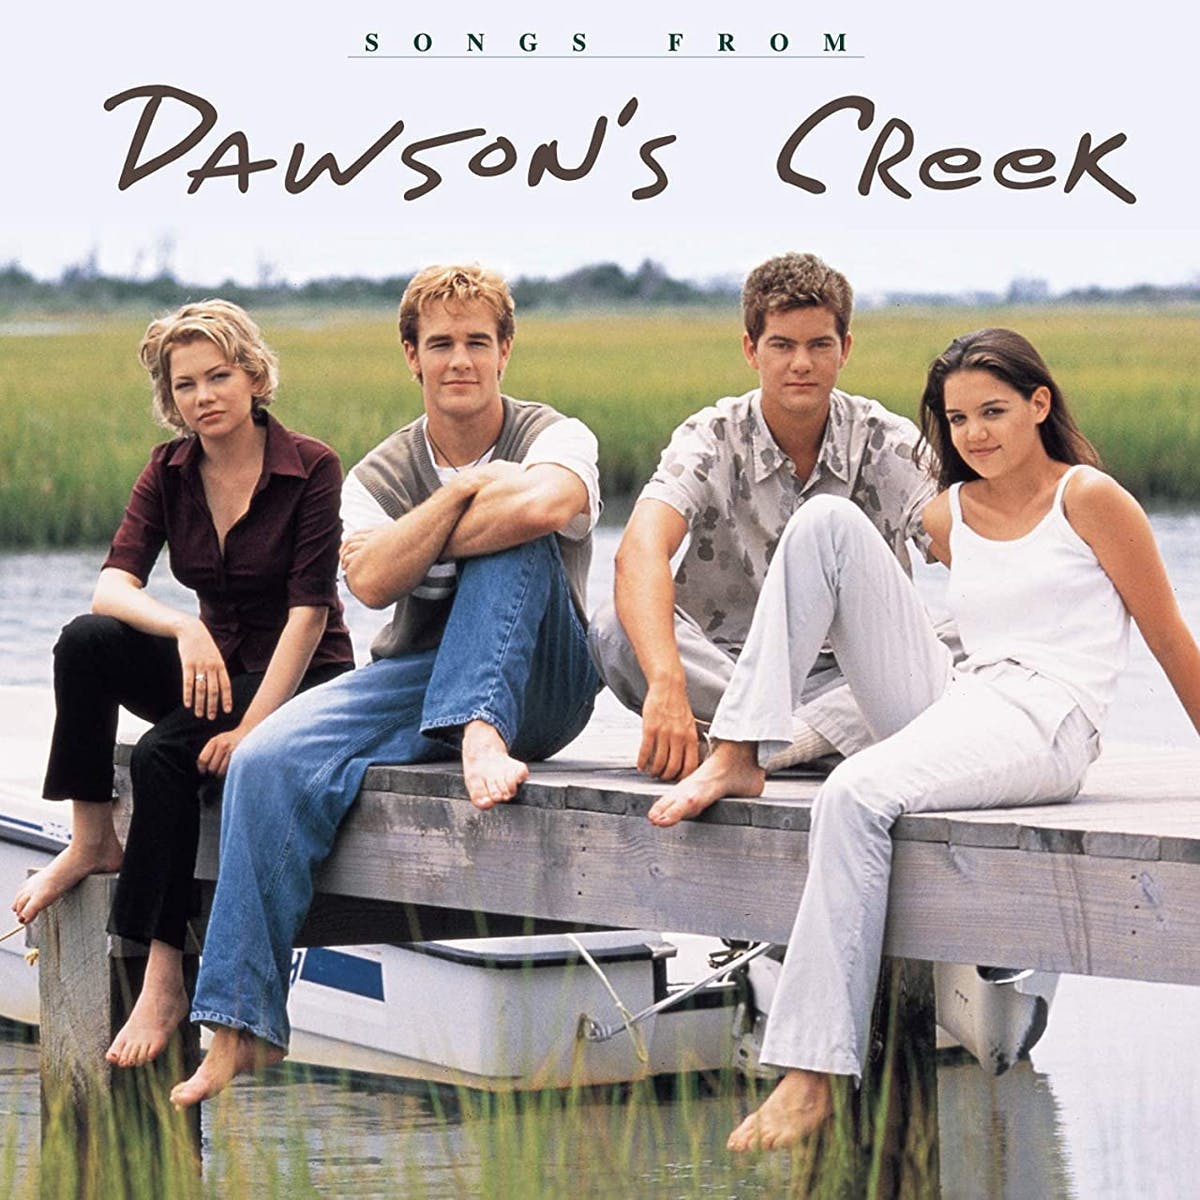 Dawson's Creek Iconic Main Song Returns On Netflix!